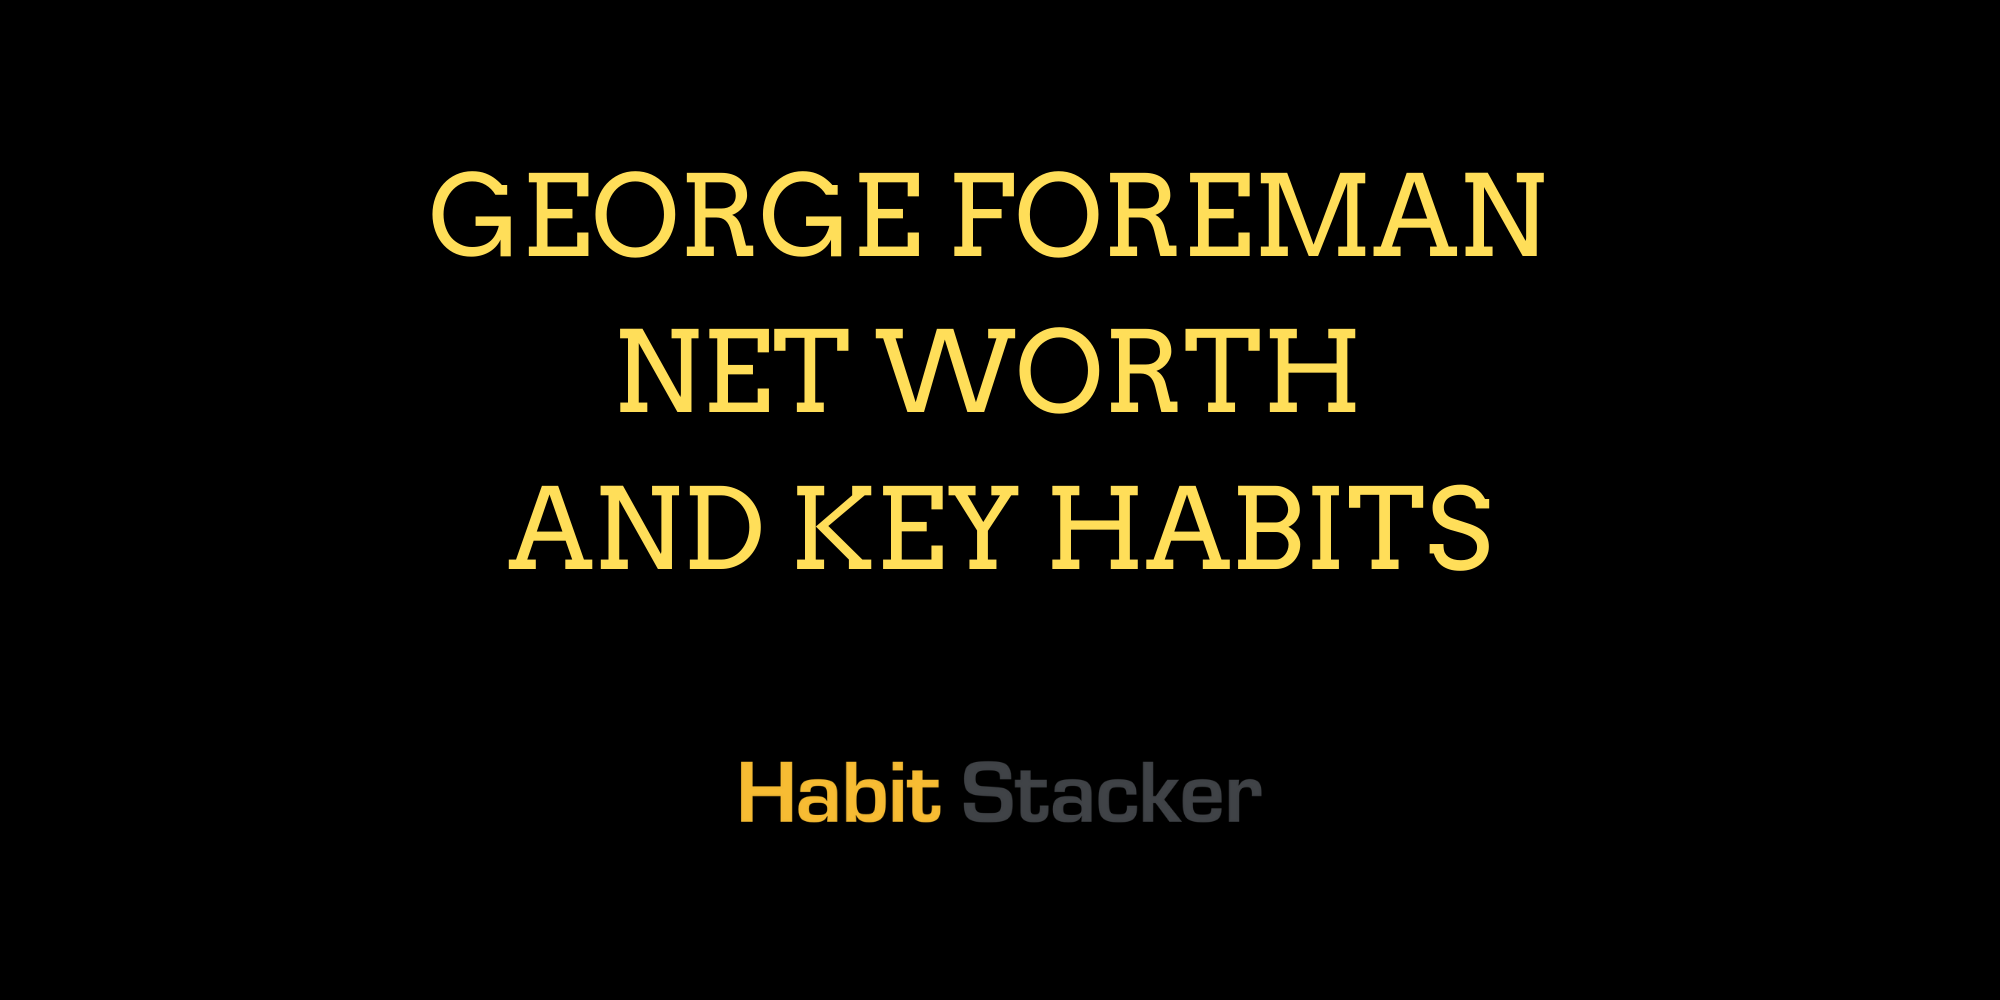 George Foreman Net Worth and Key Habits